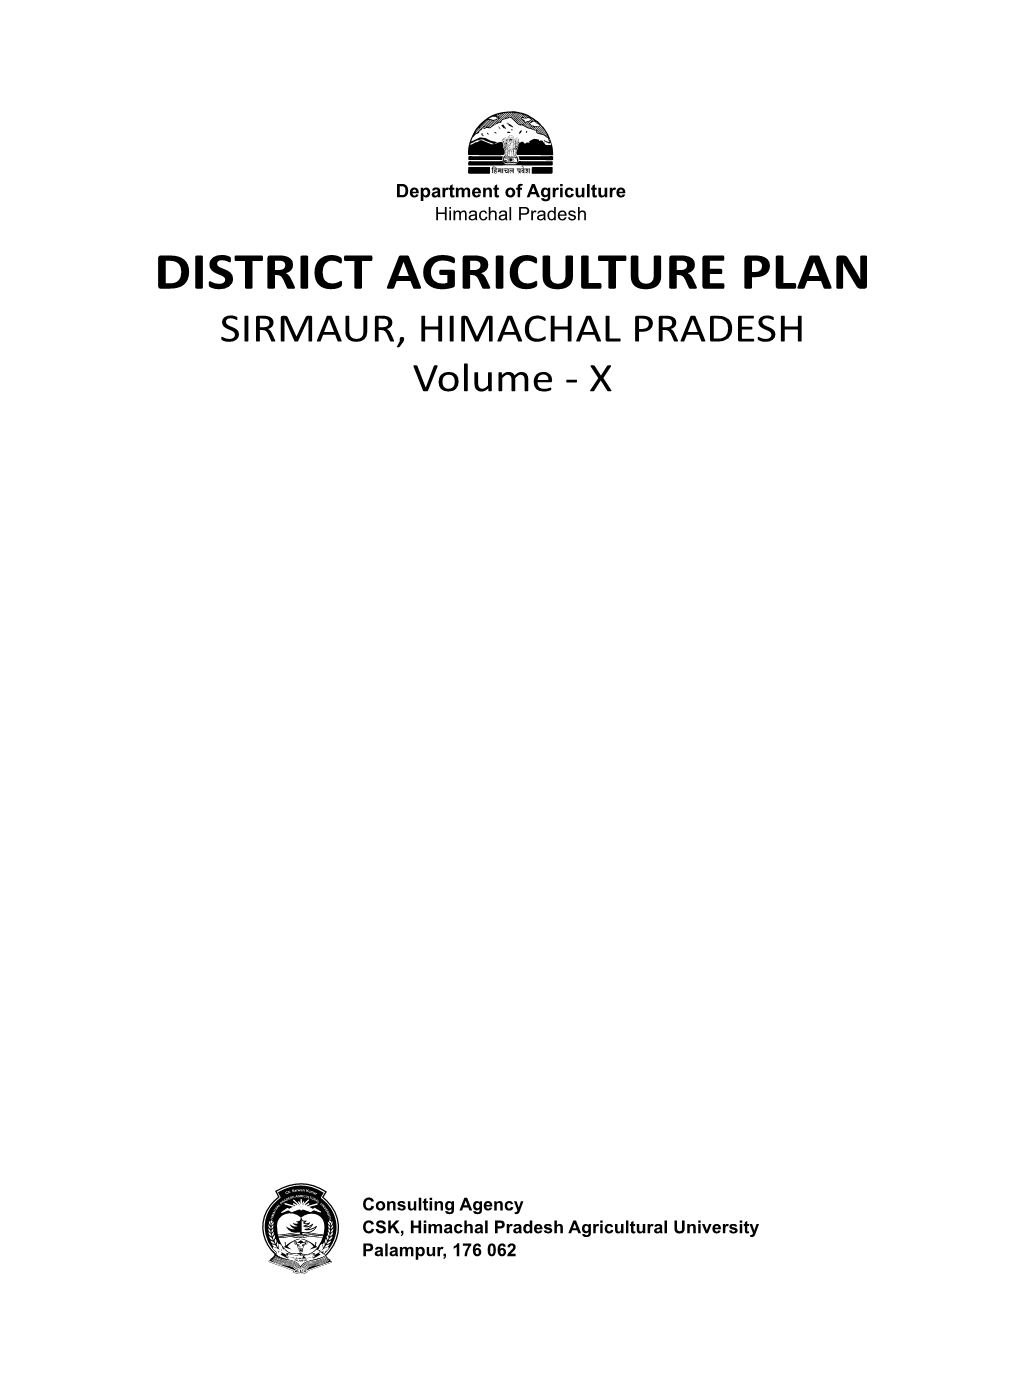 Agriculture Plan Sirmaur